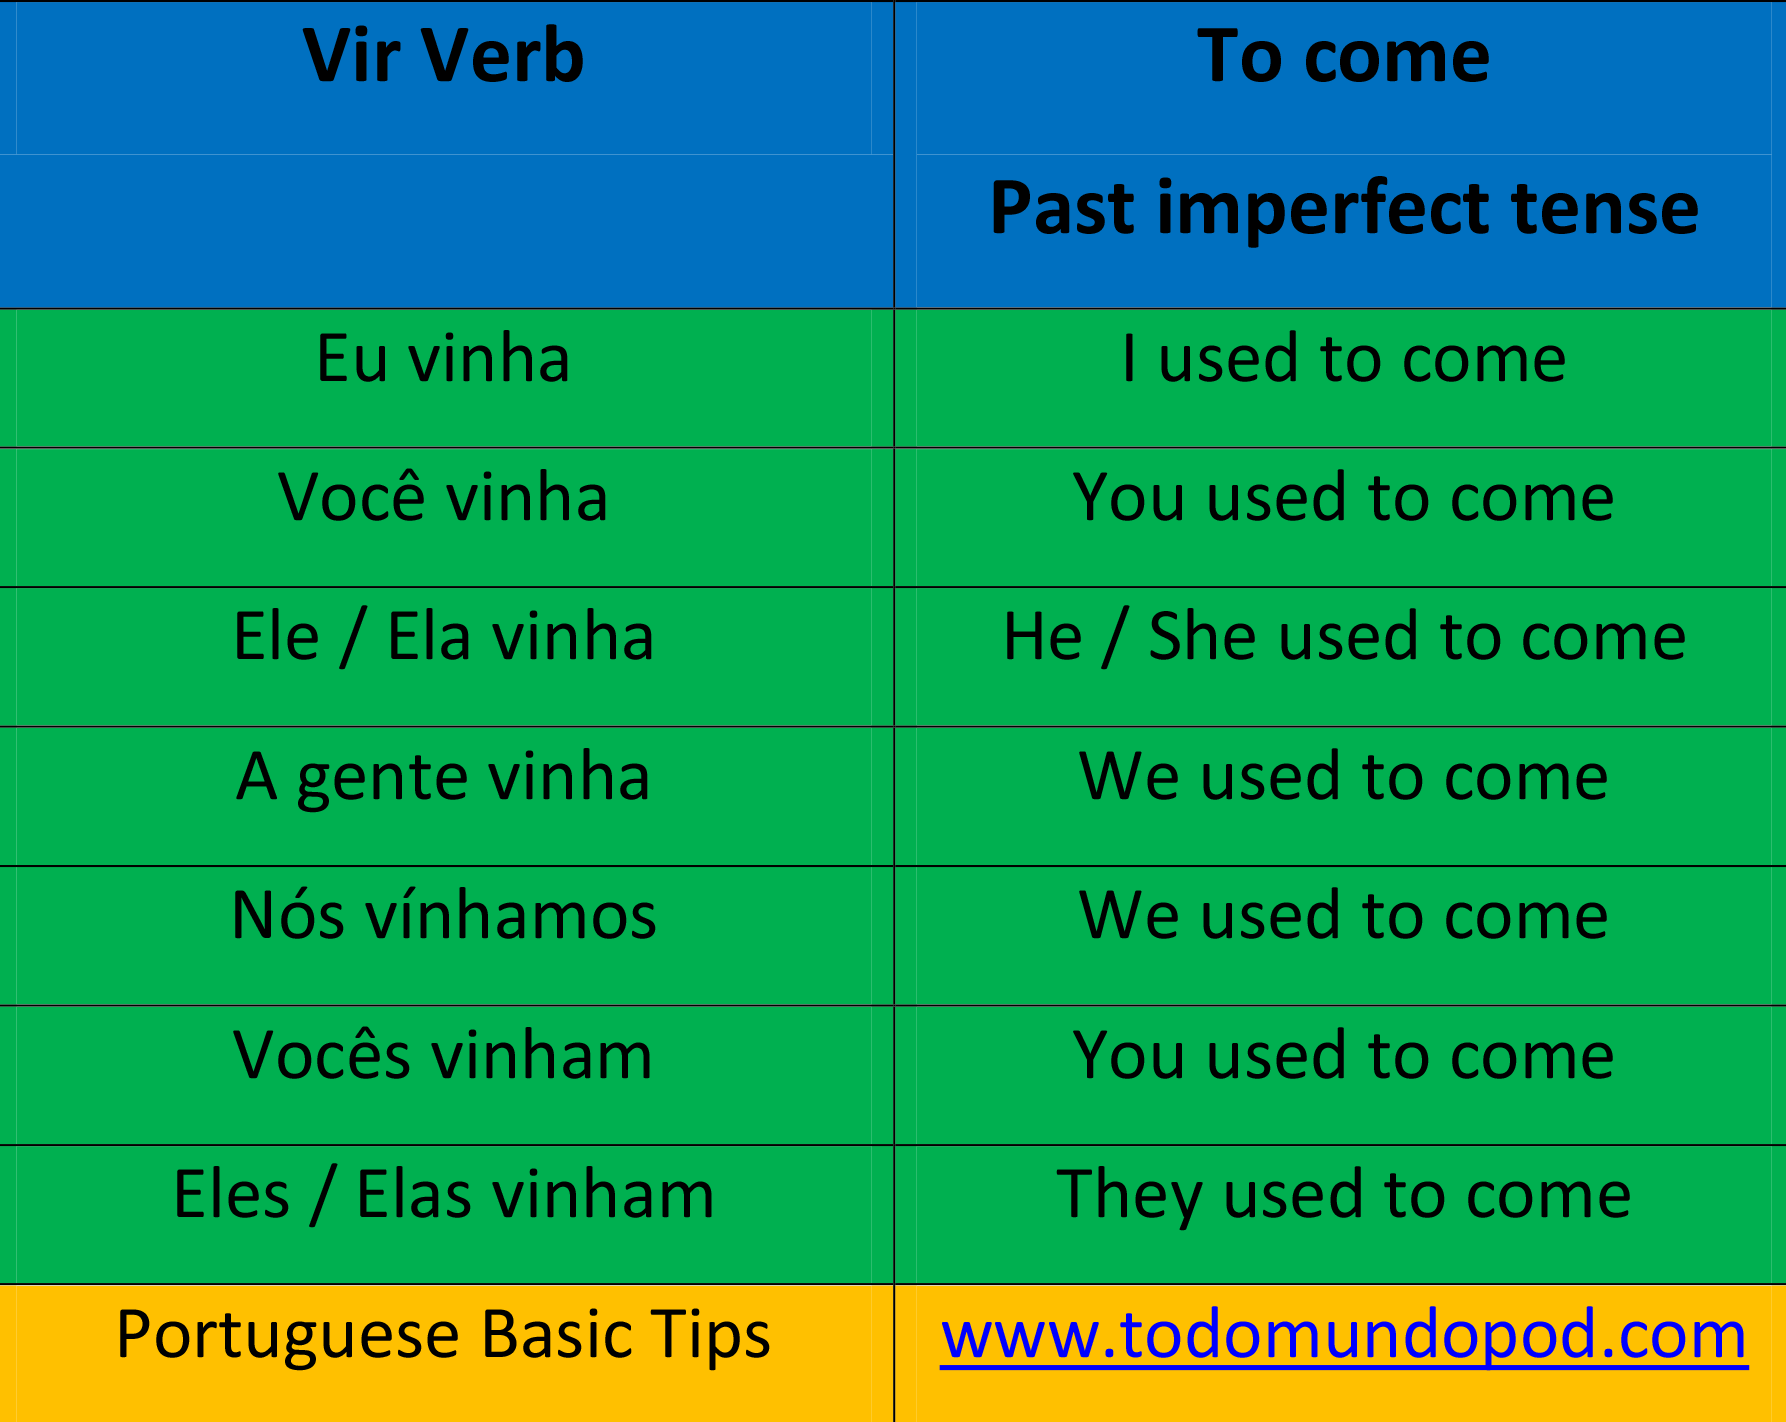 Vir conjugation - Portuguese past imperfect tense